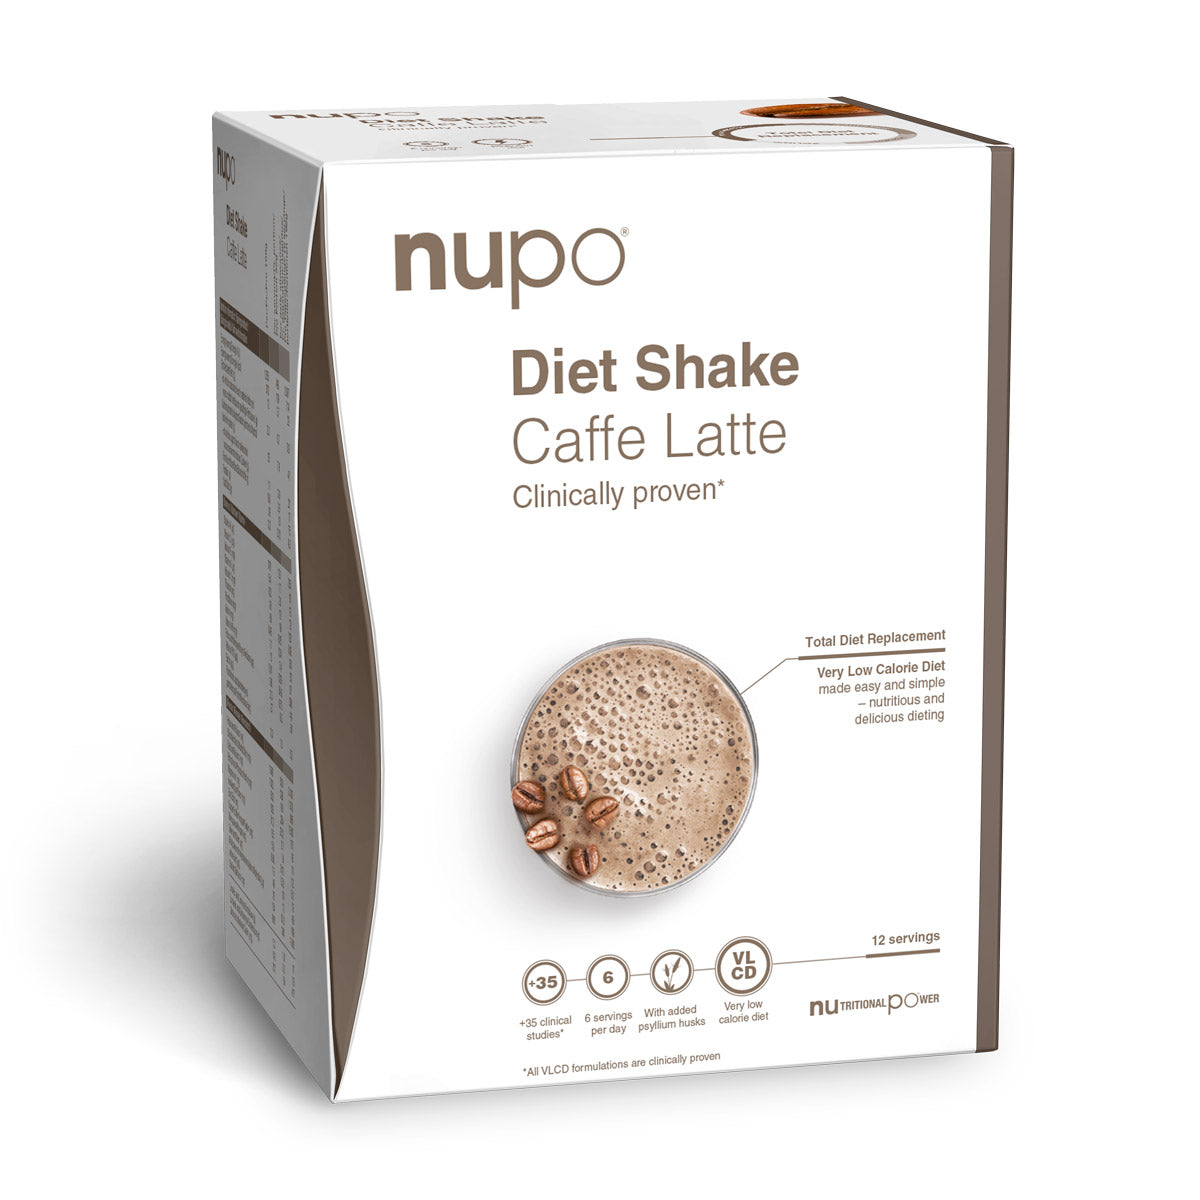 Se Nupo Diet Shake (384g) - Caffe Latte hos Muscle House